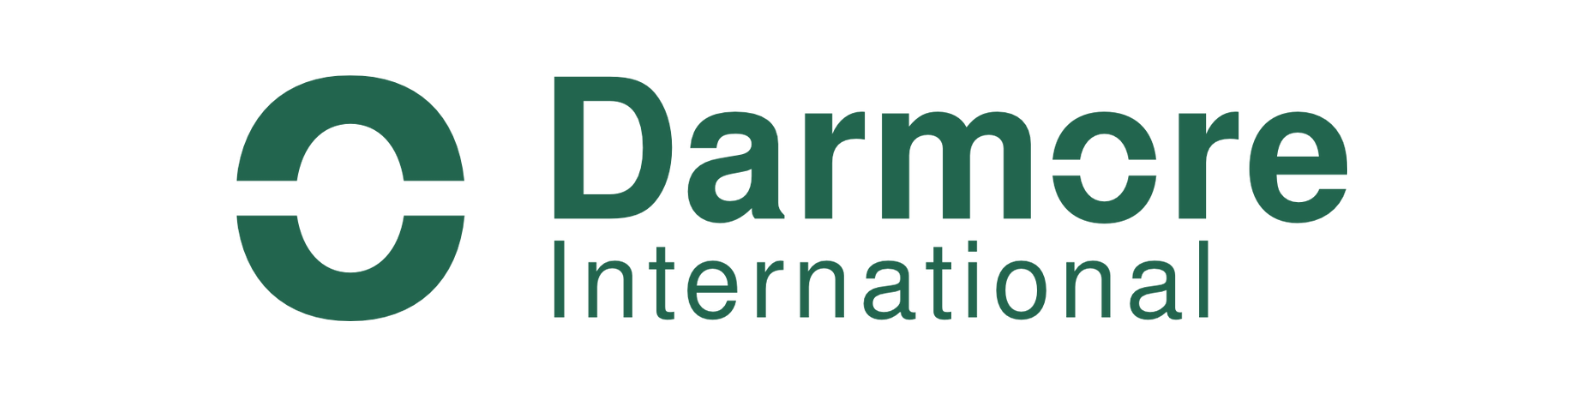 Darmore International